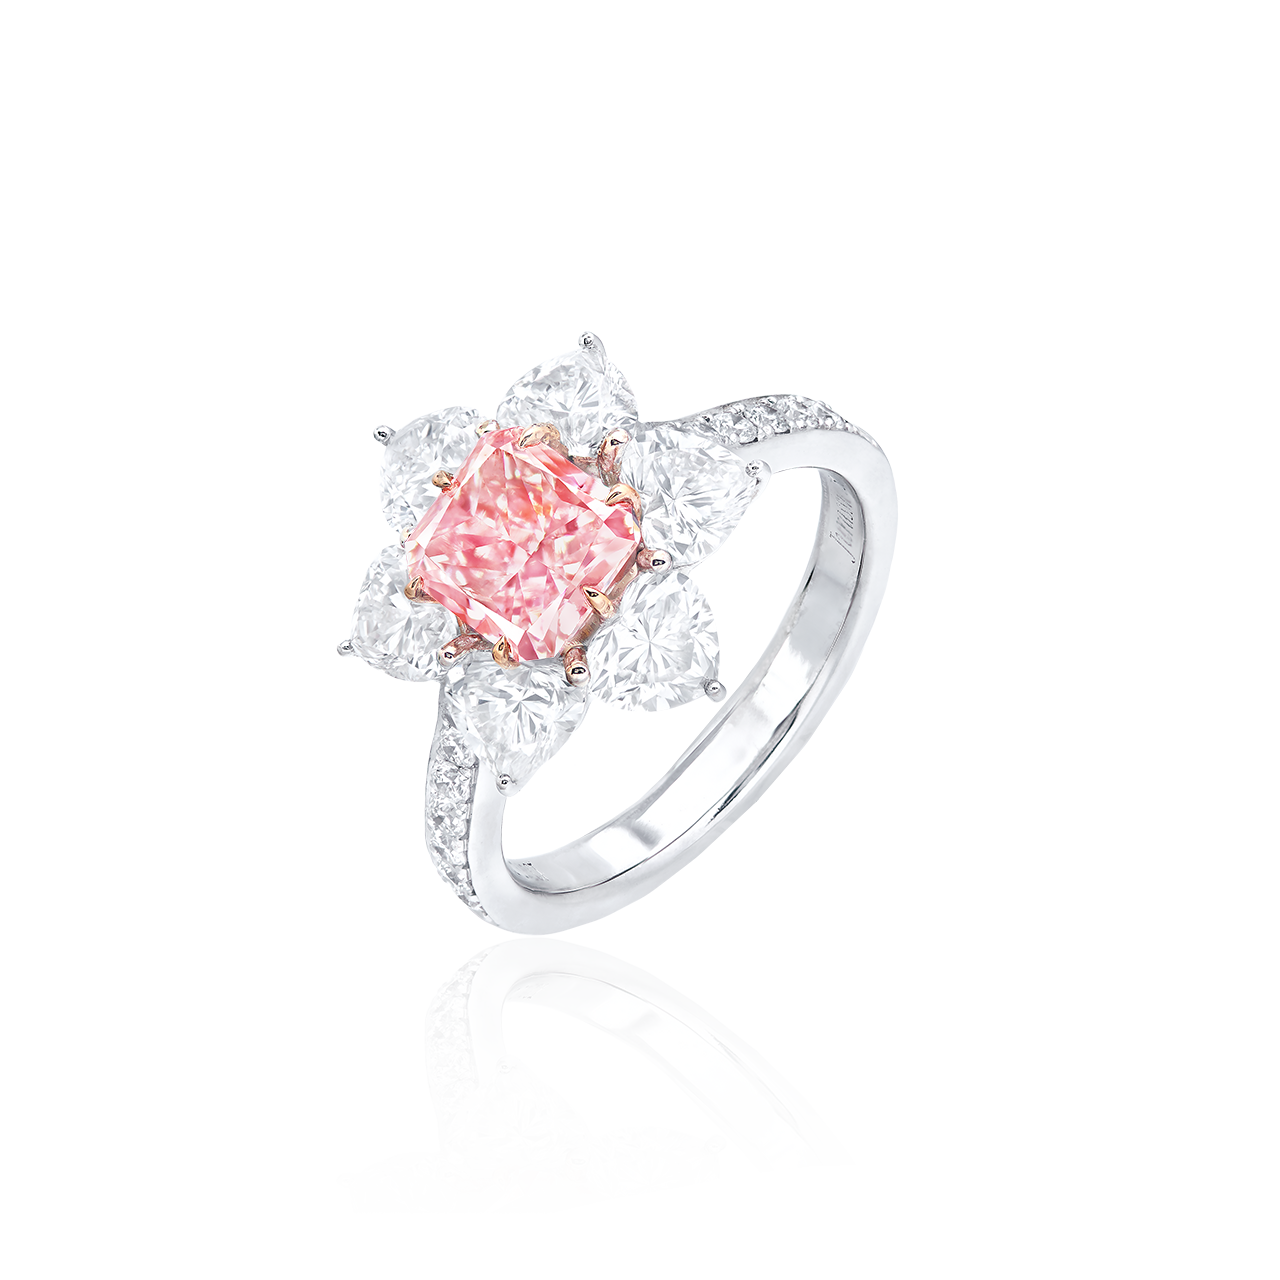 GIA 1.01克拉 粉彩鑽鑽戒
Fancy Pink Colored Diamond Ring